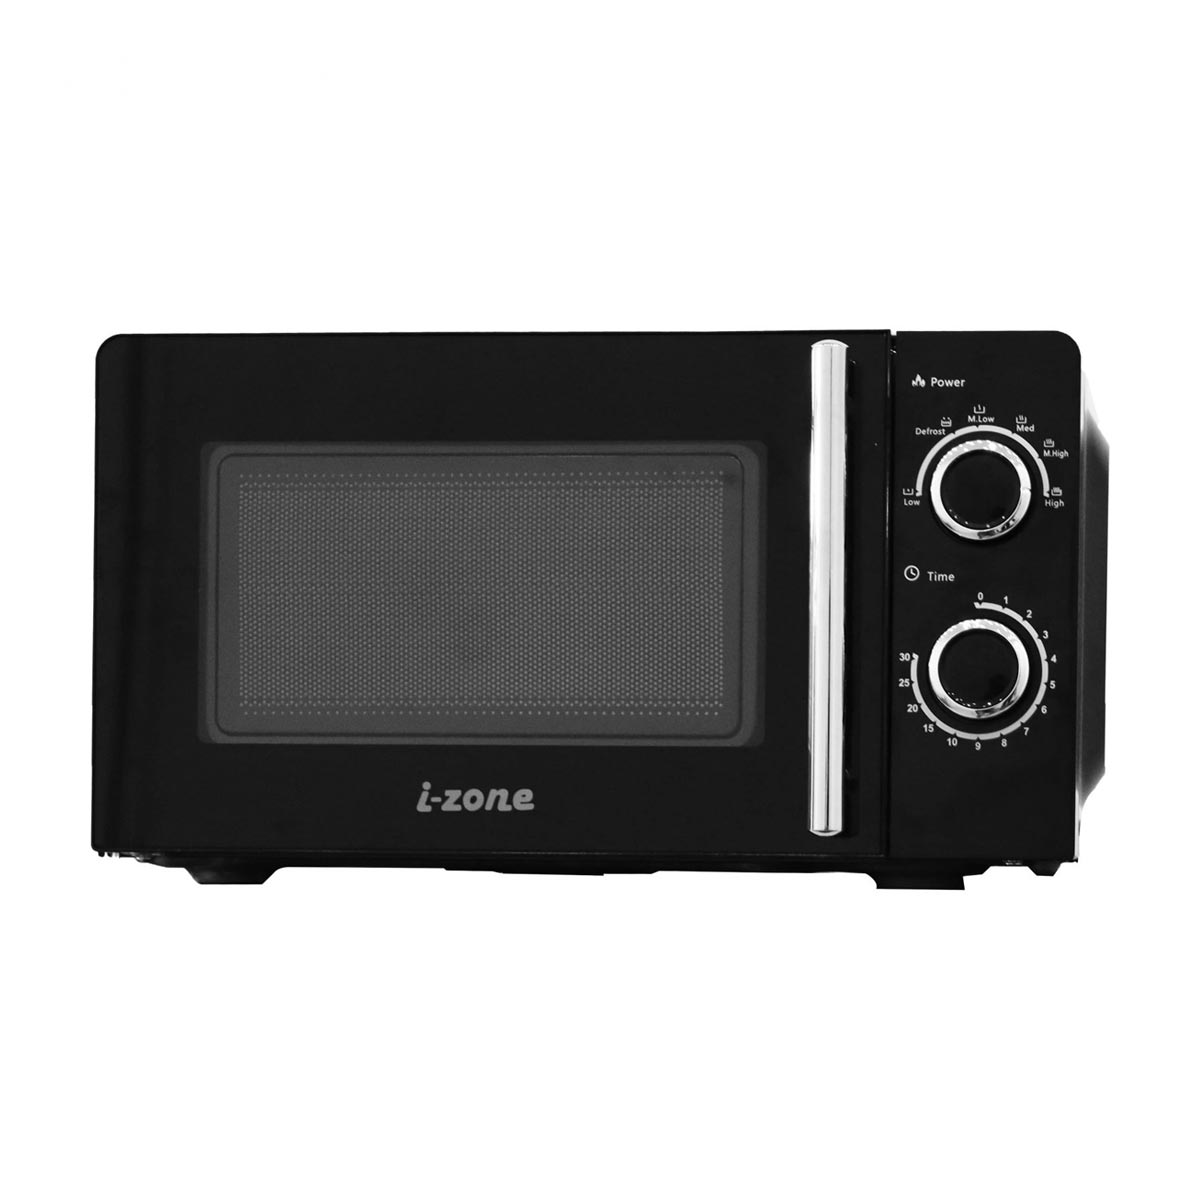 iZone Microwave Oven 207 Black